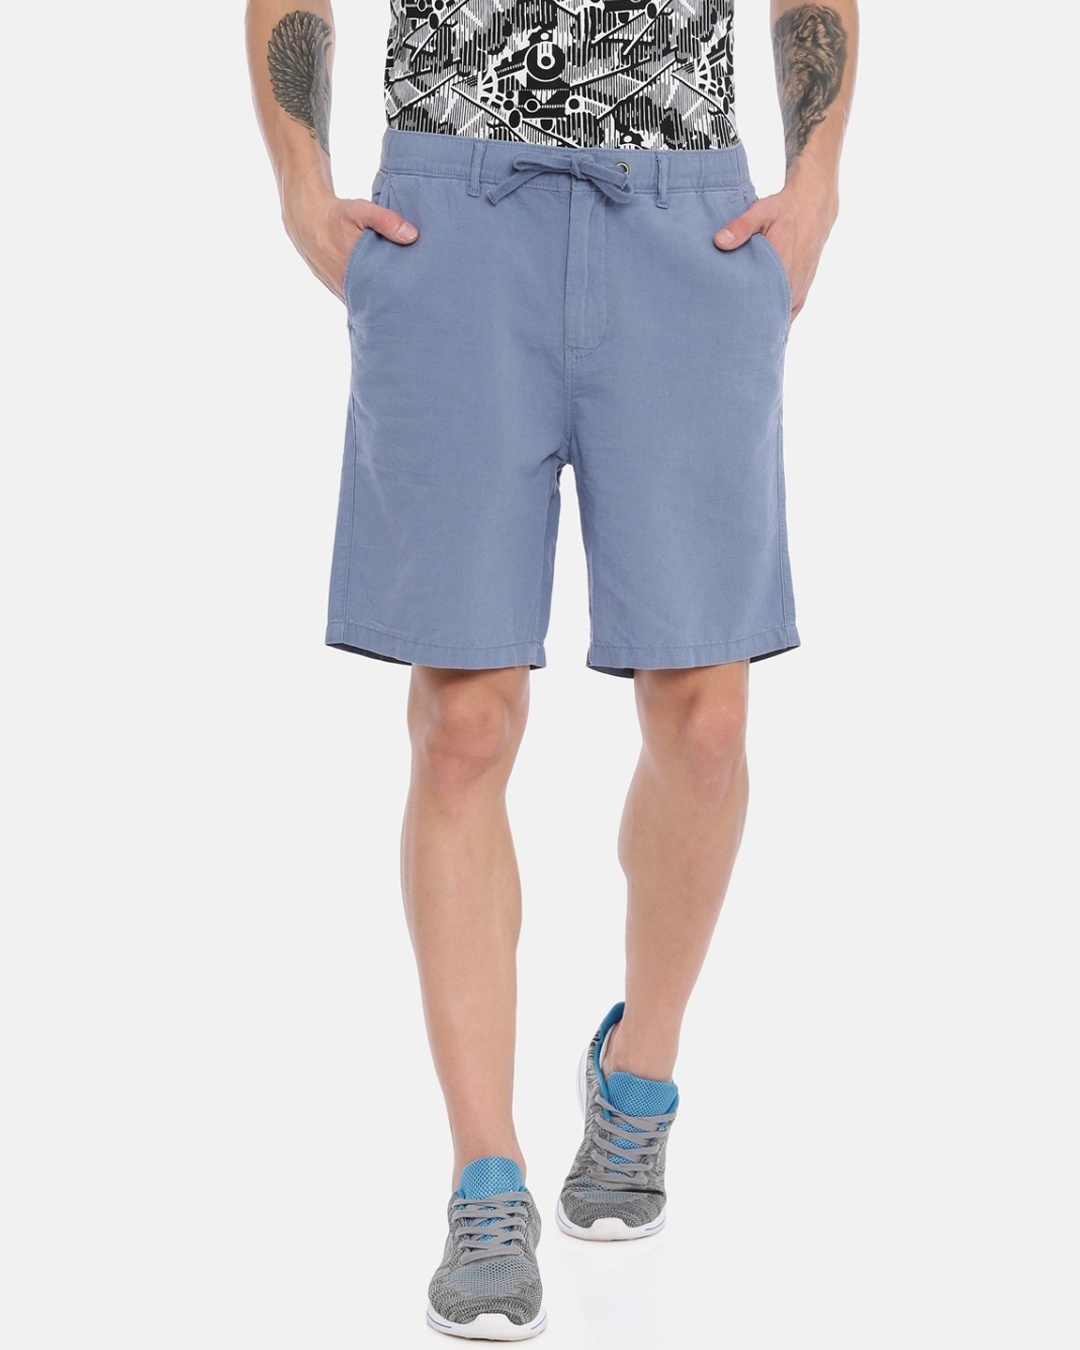 Shop Men Solid Casual Shorts-Front